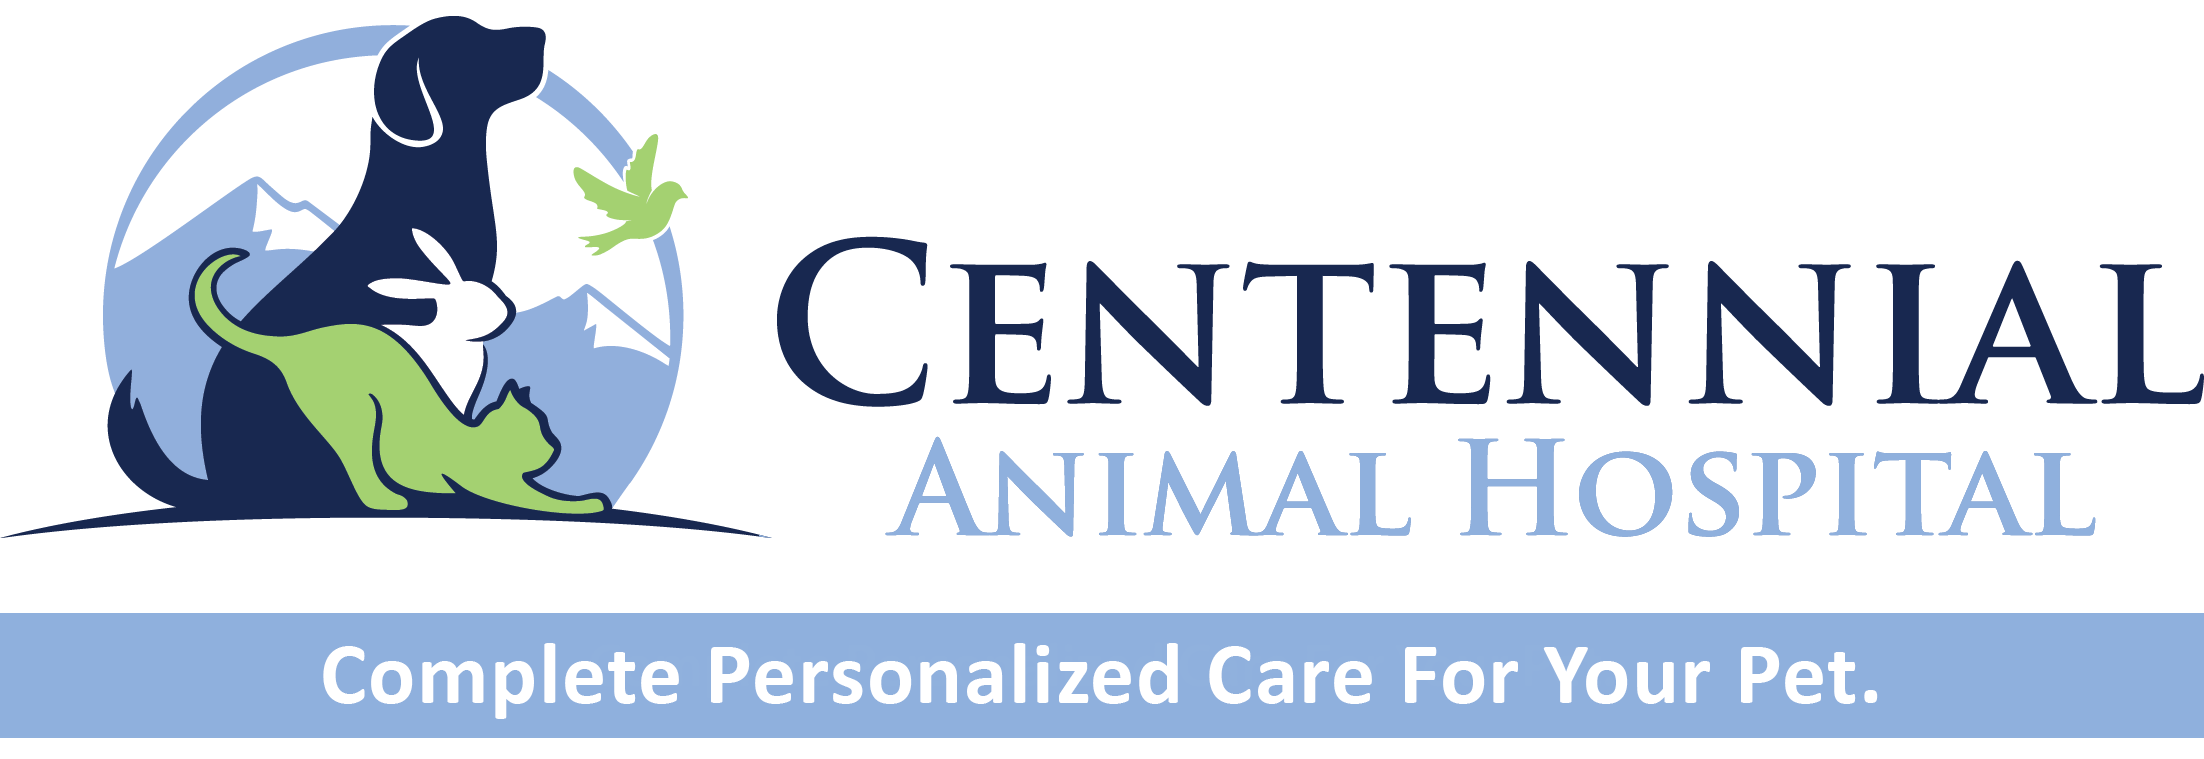 Animal Hospital Logo - Colorado Springs, CO Veterinarian Animal Hospital